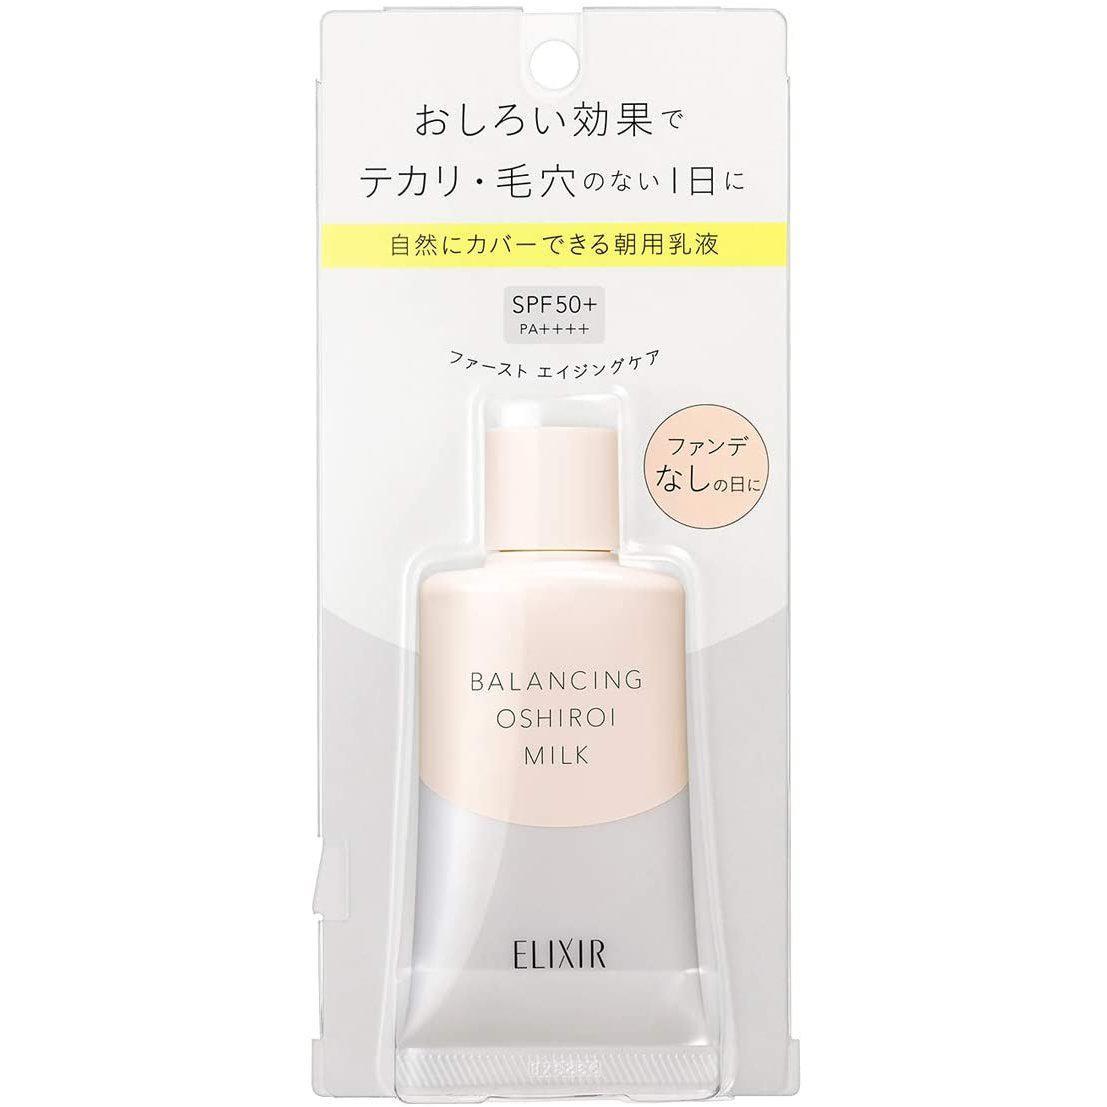 Shiseido Elixir Reflet Balancing Oshiroi Milk C SPF 50+ PA++++ 35g